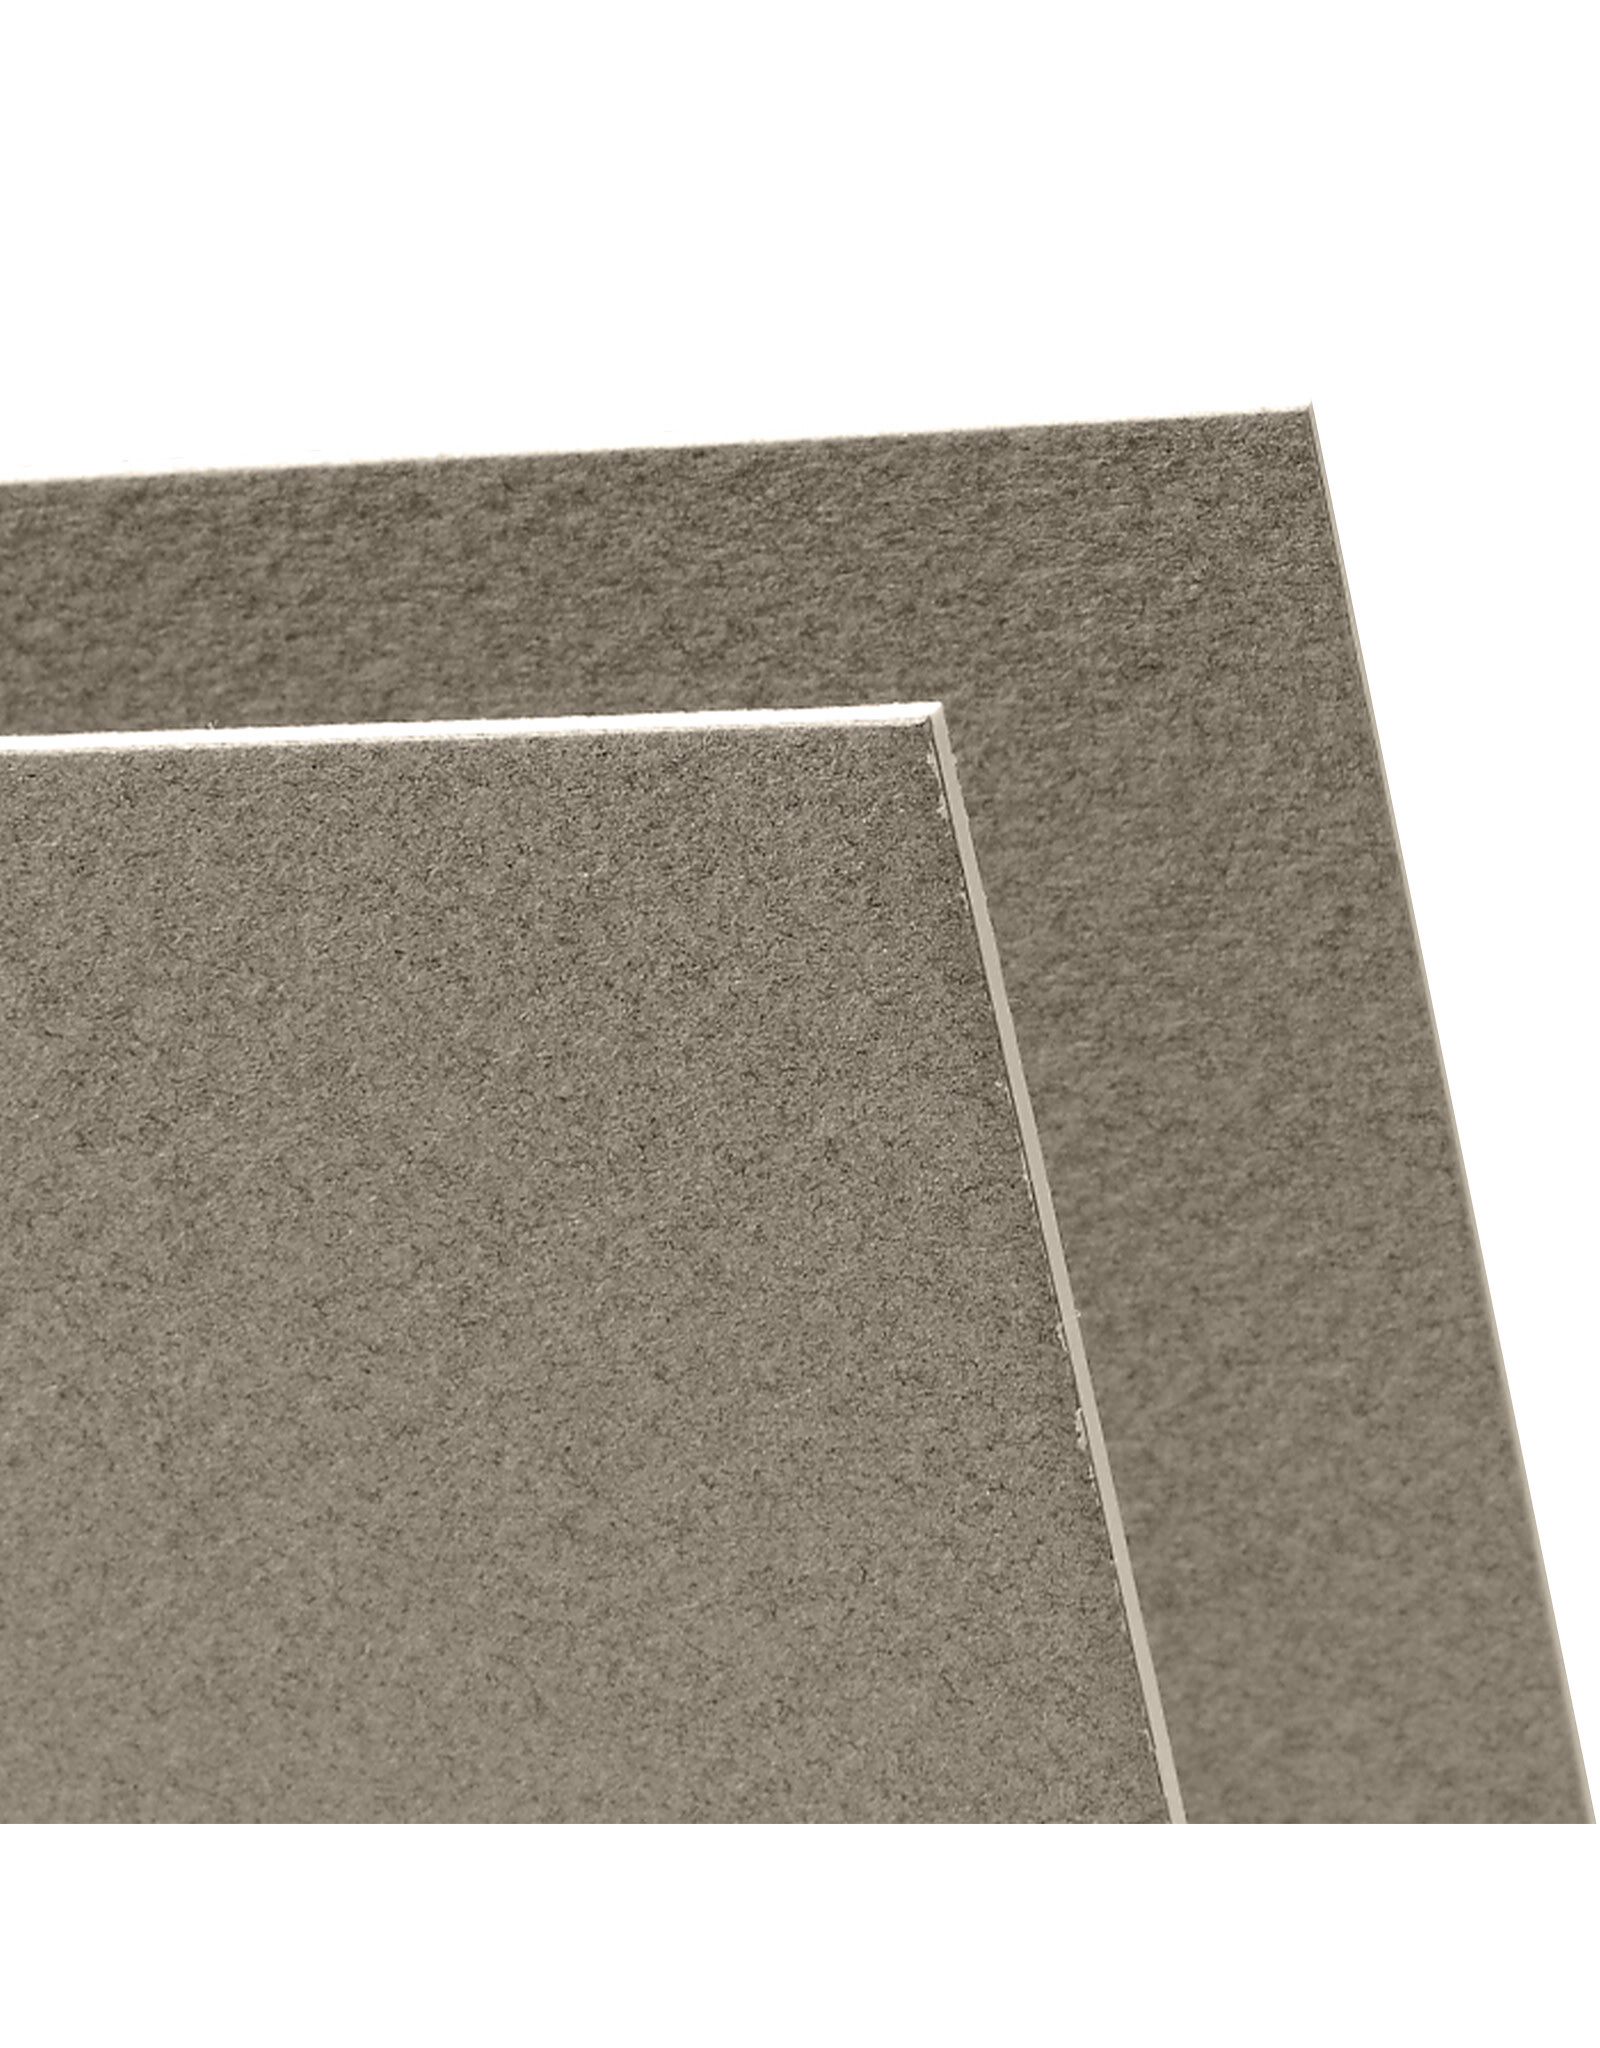 Canson Canson Mi Teintes Pastel Board, 16” x 20”, Steel Gray 431